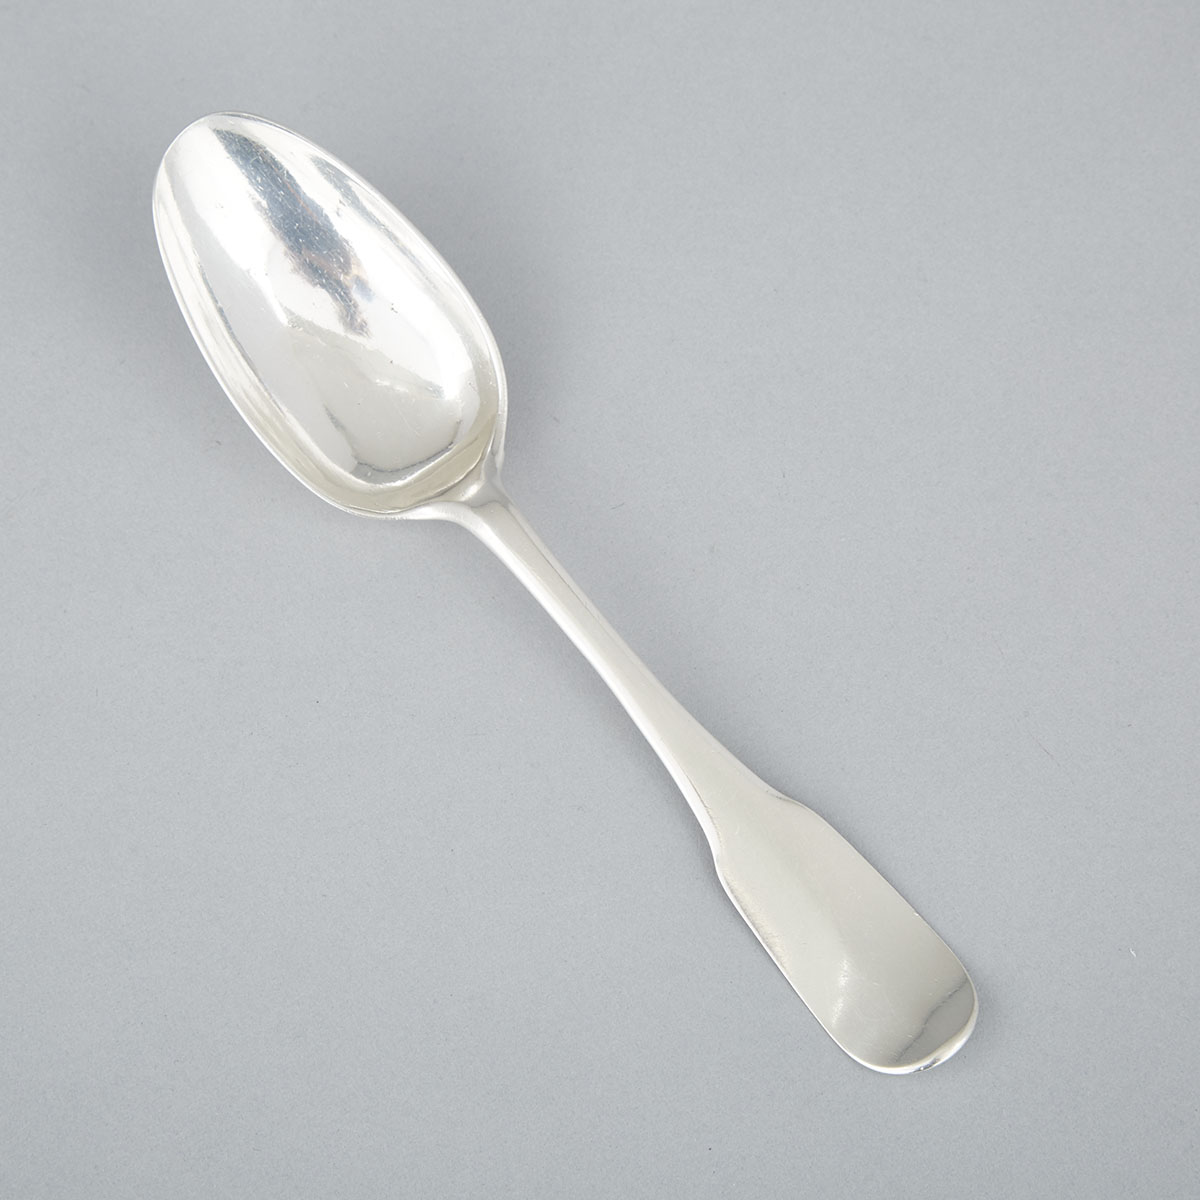 Canadian Silver Table Spoon, Michel Cotton, Quebec City, Que., mid-18th century